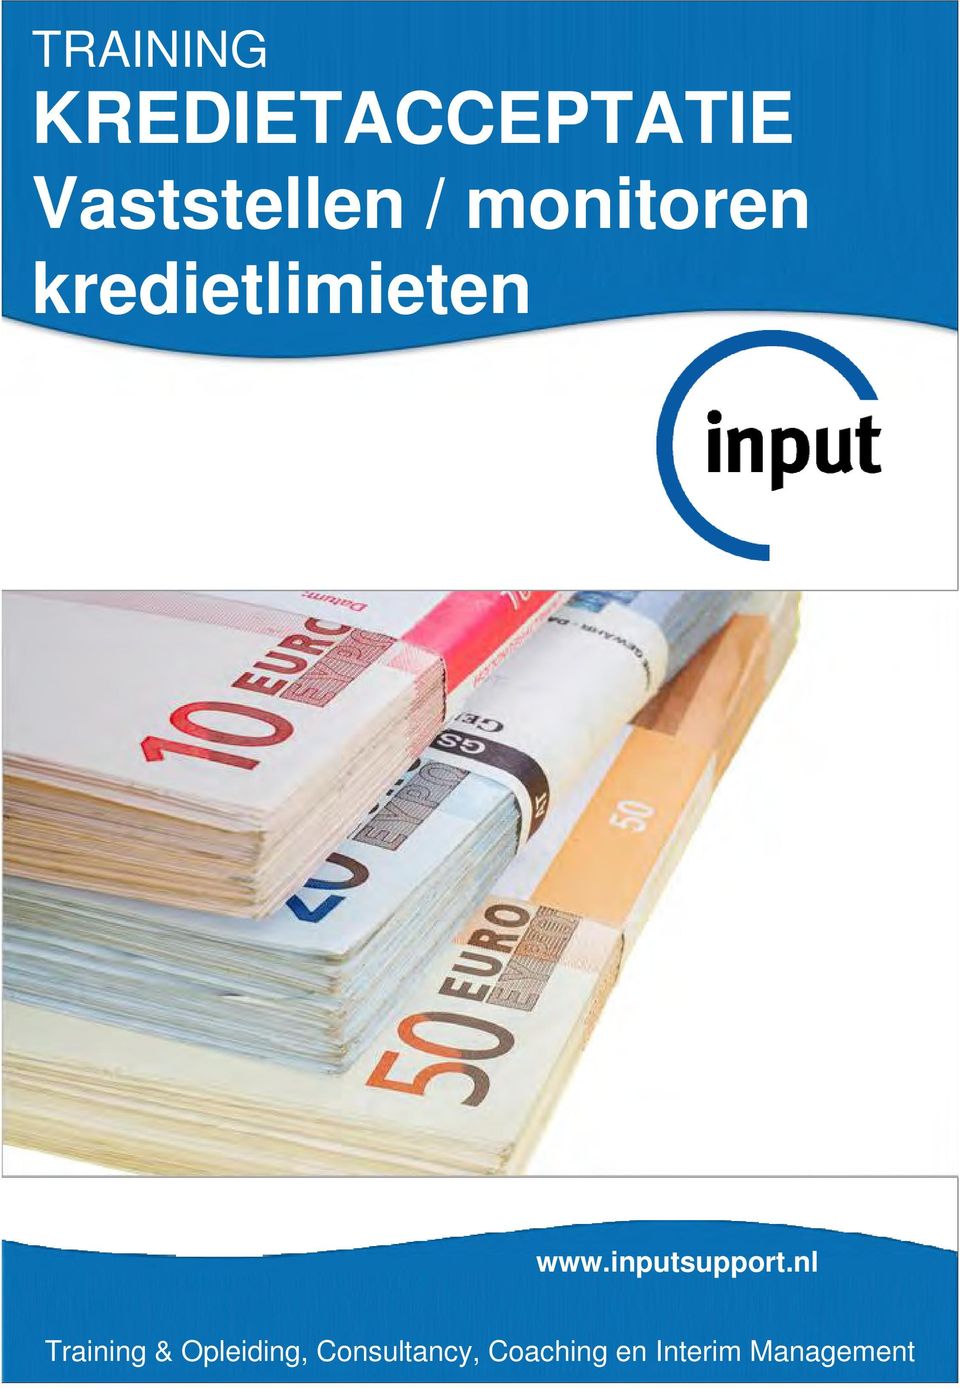 kredietlimieten www.inputsupport.